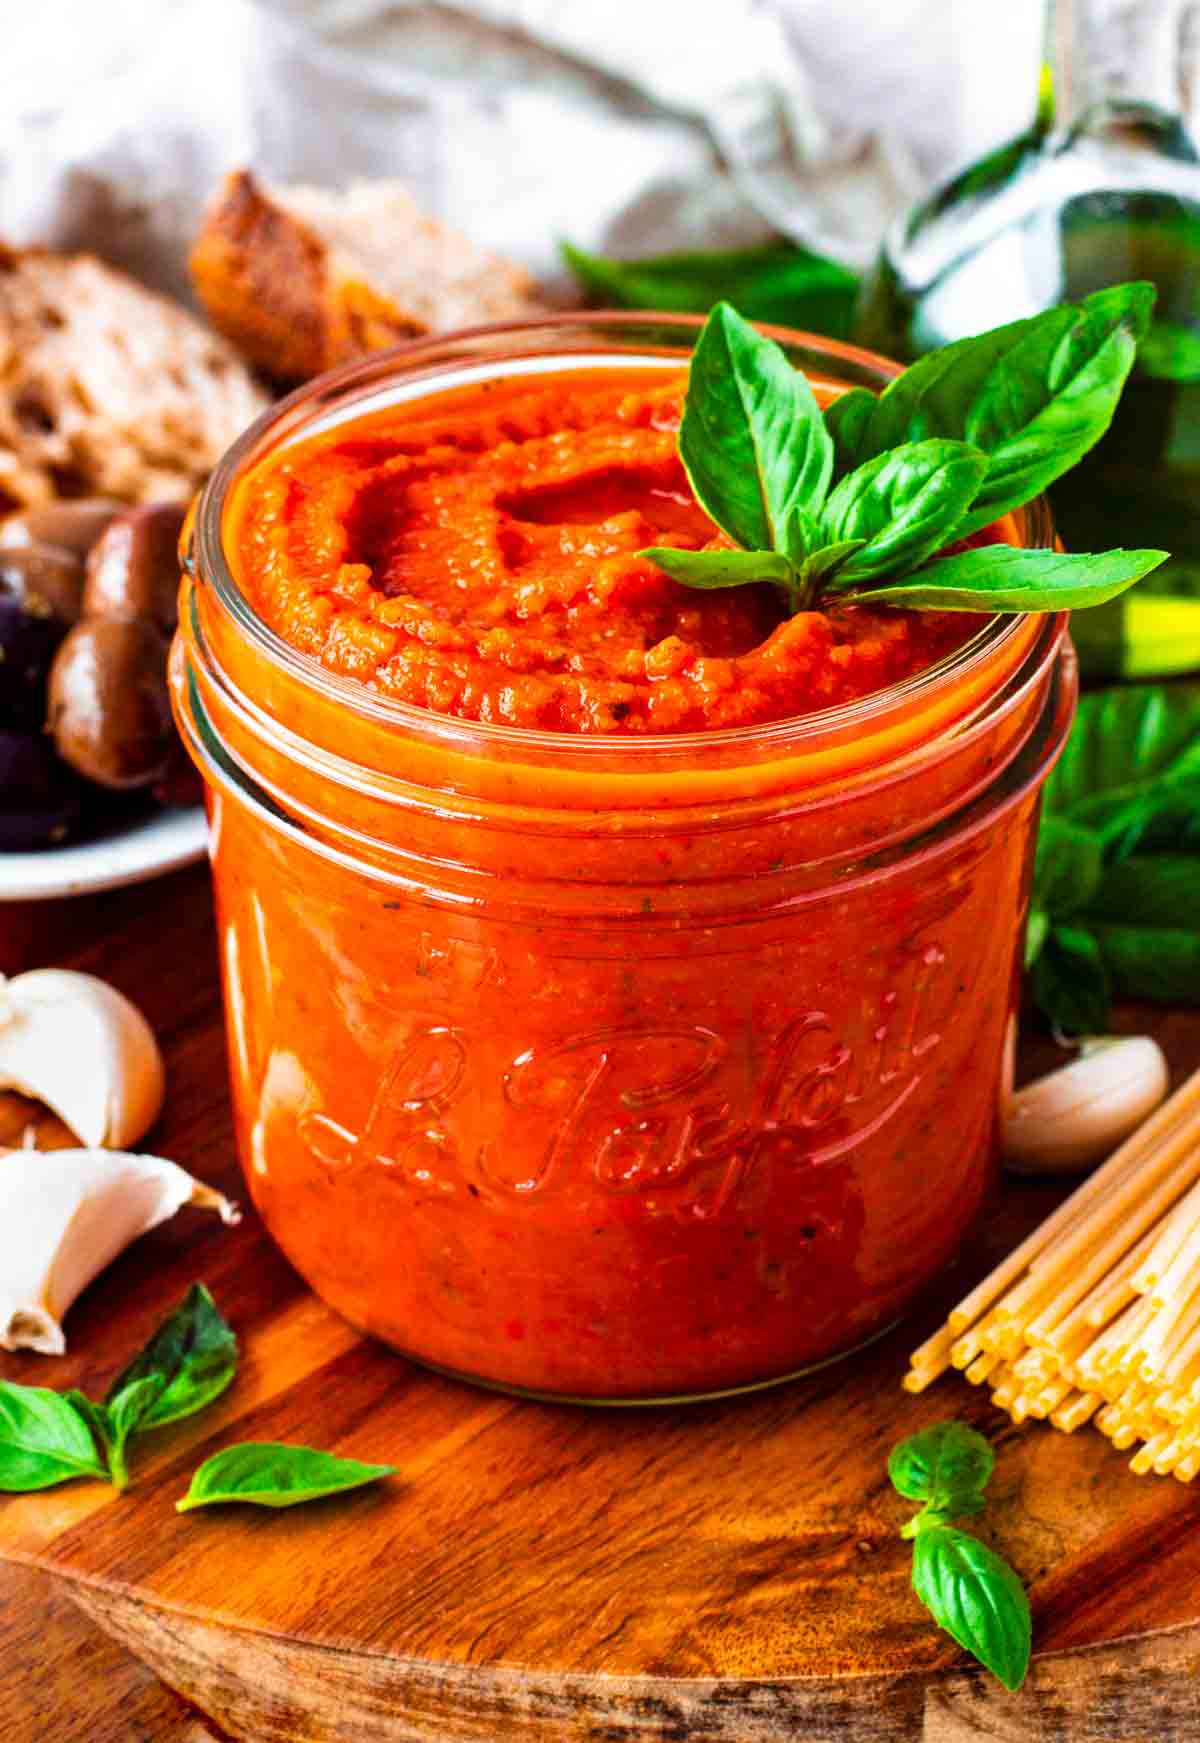 Hidden veggie pasta sauce in a glass jar.